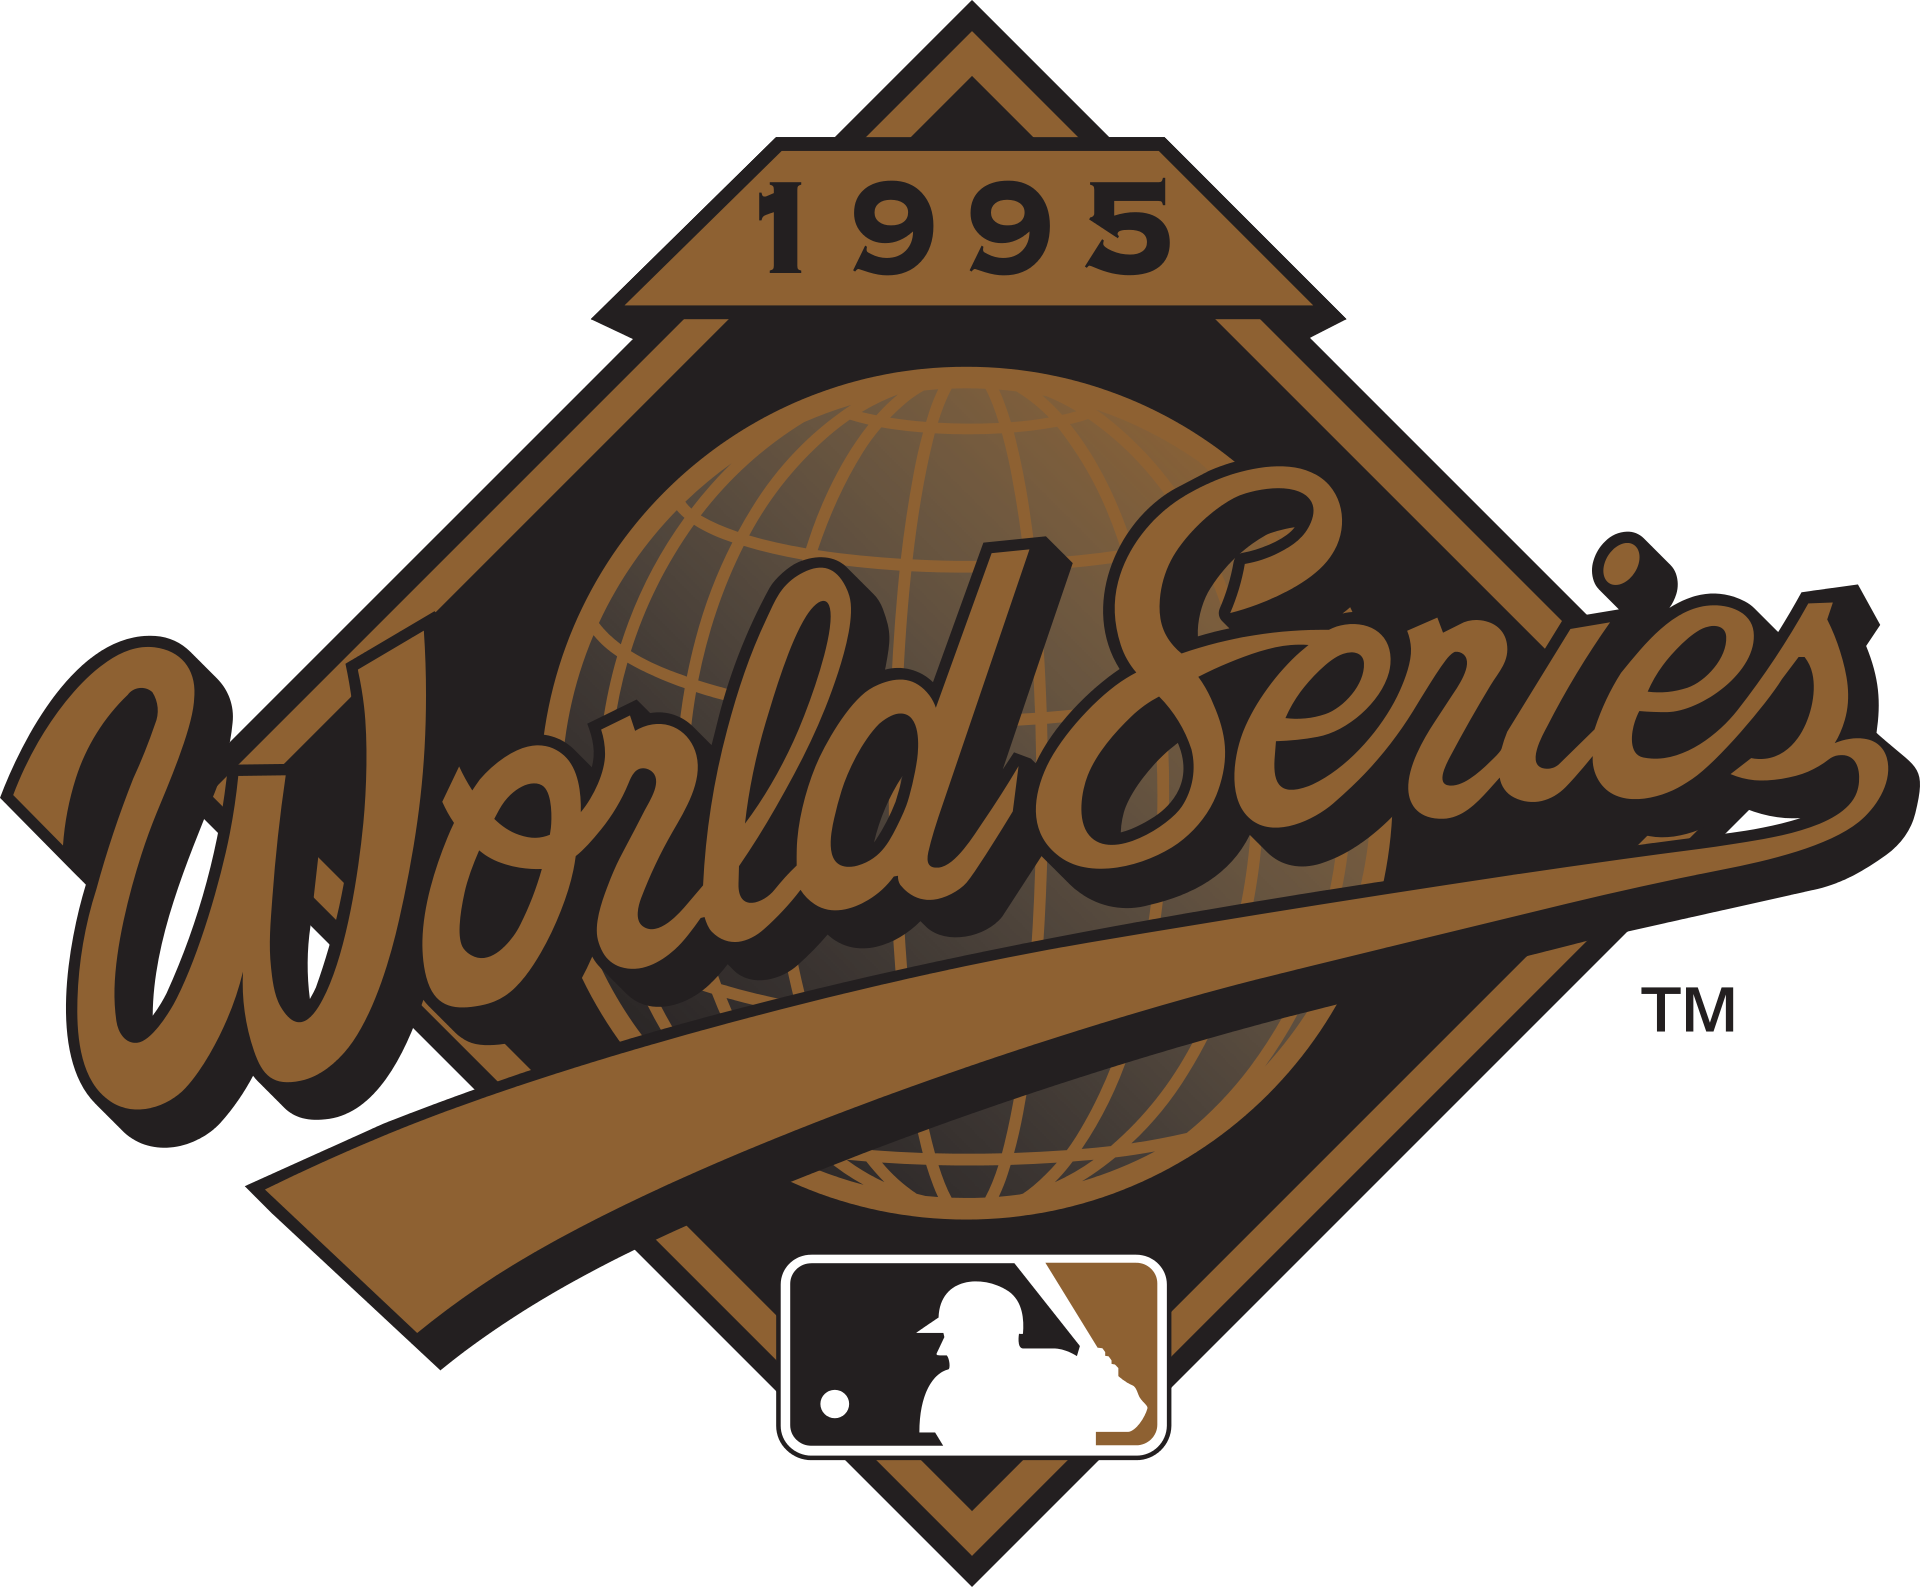 Cleveland Indians Wikipedia - 1995 World Series Logo (1920x1590)